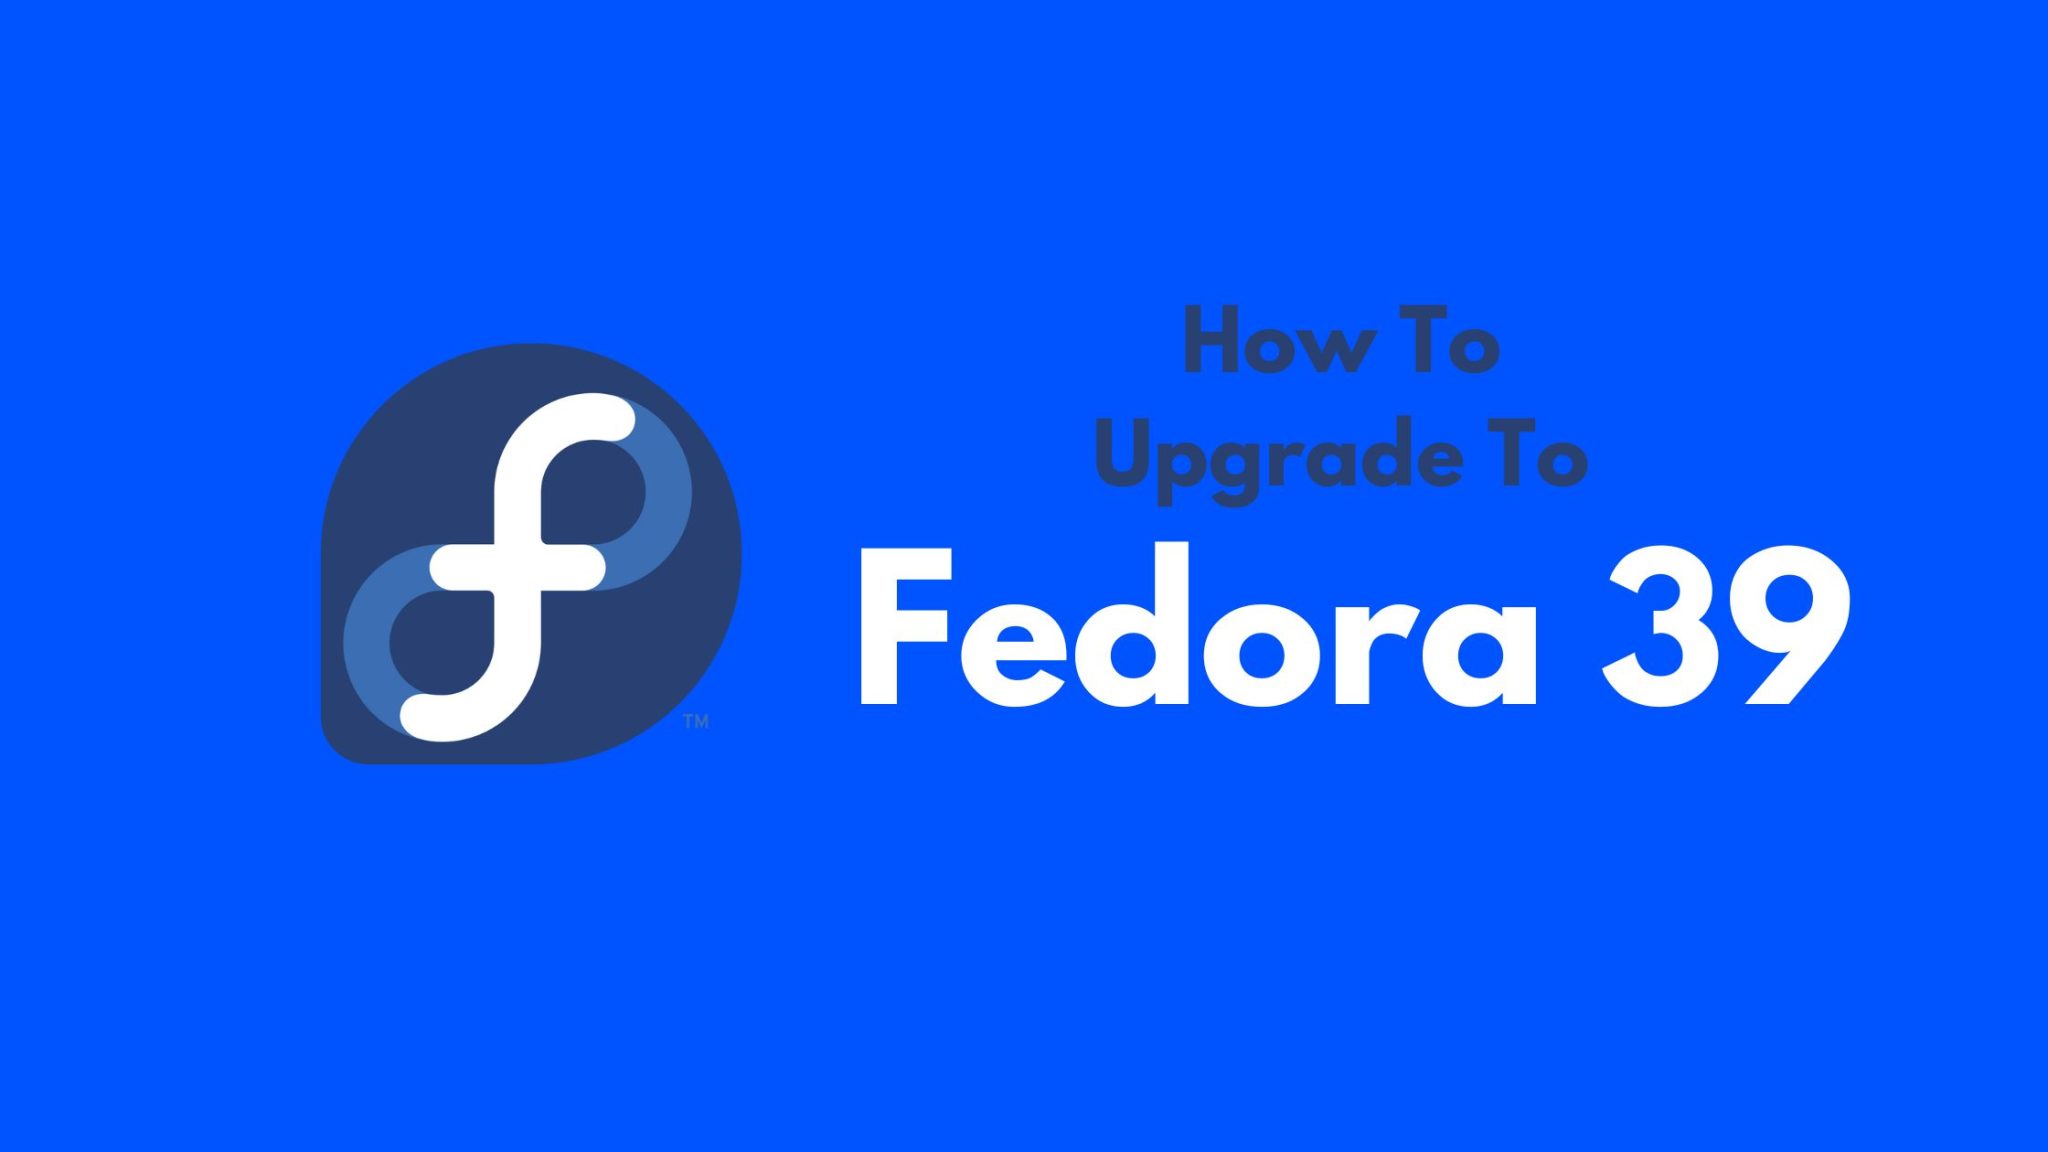 How To Upgrade Fedora 38 To Fedora 39